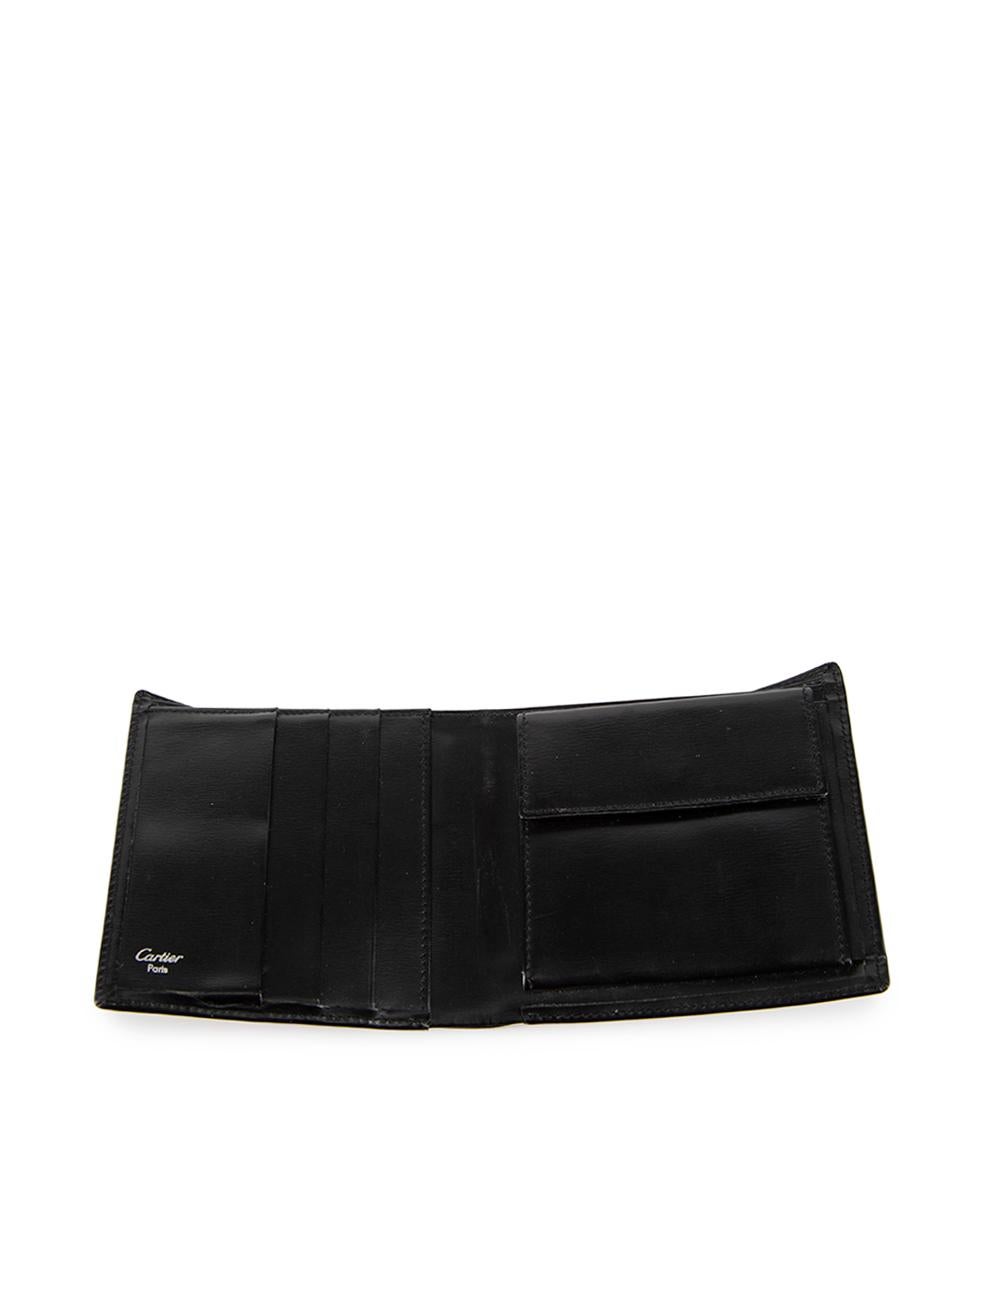 Cartier Black Leather Bifold Wallet 1